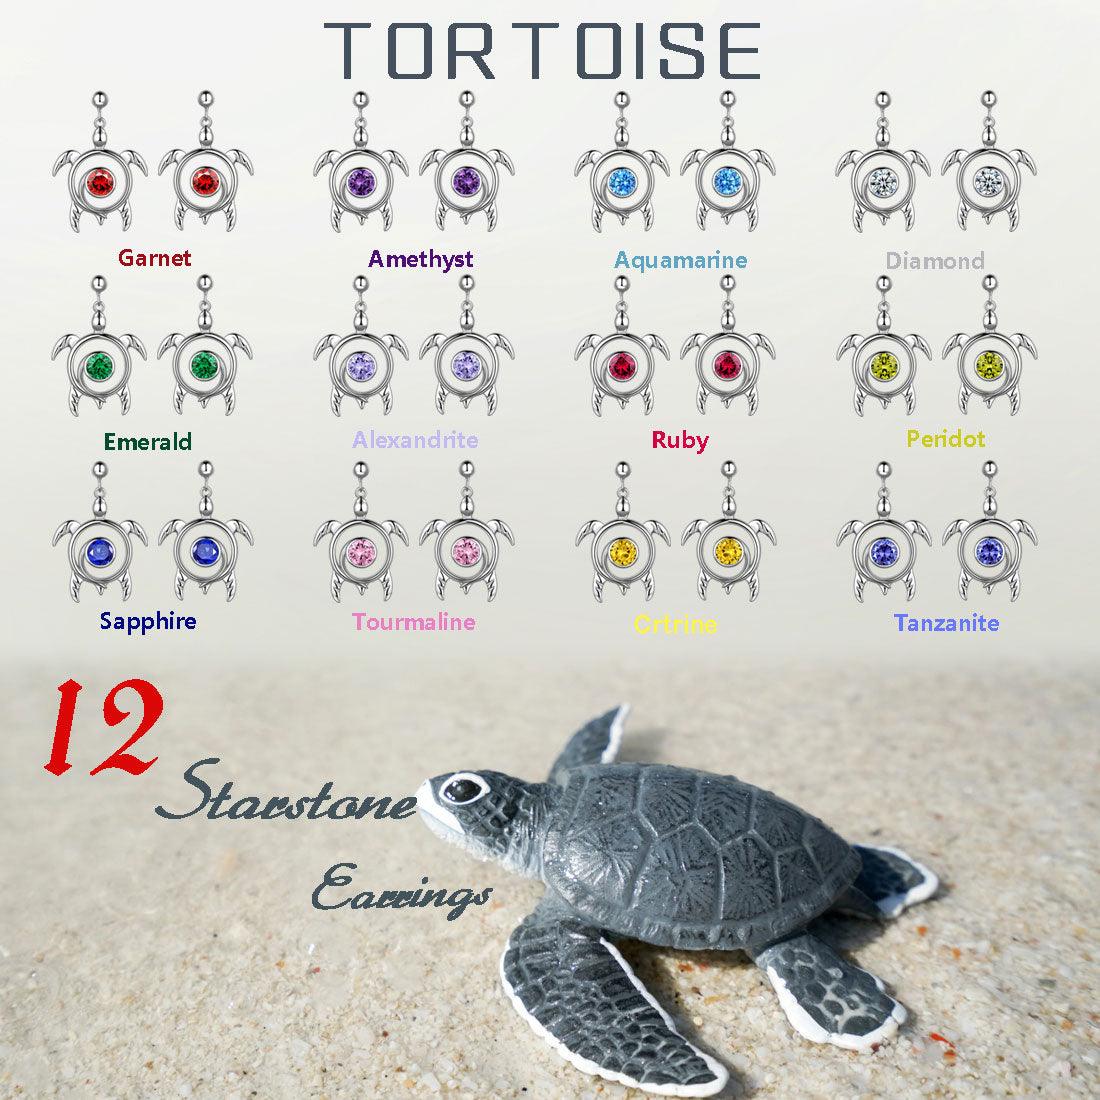 Turtle Birthstone September Sapphire Earrings Sterling Silver - Earrings - Aurora Tears